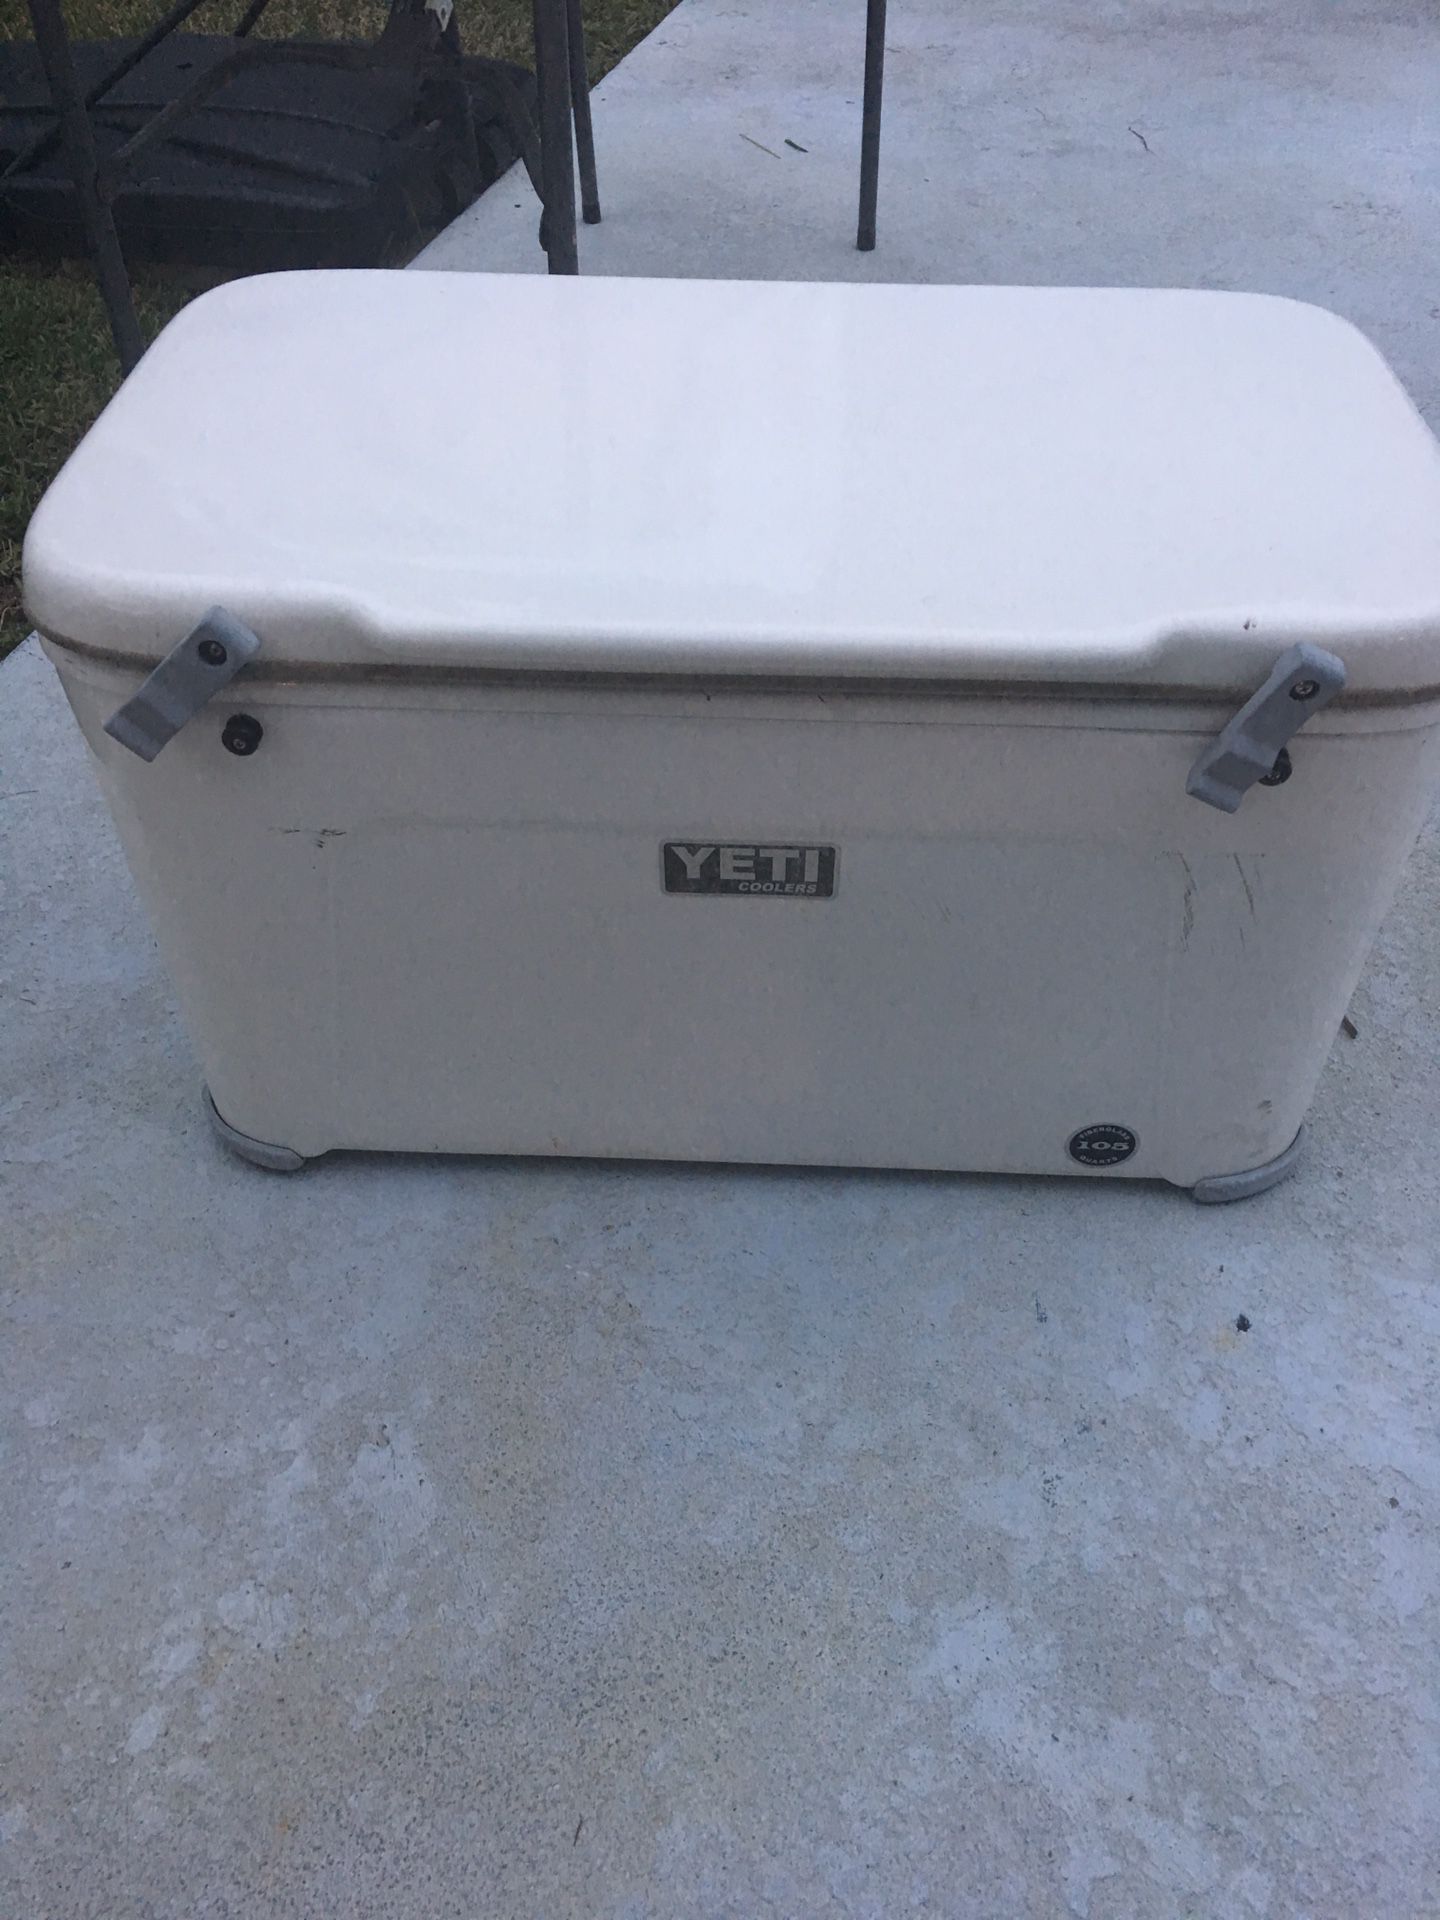 Yeti Cooler for Sale in Hialeah, FL - OfferUp